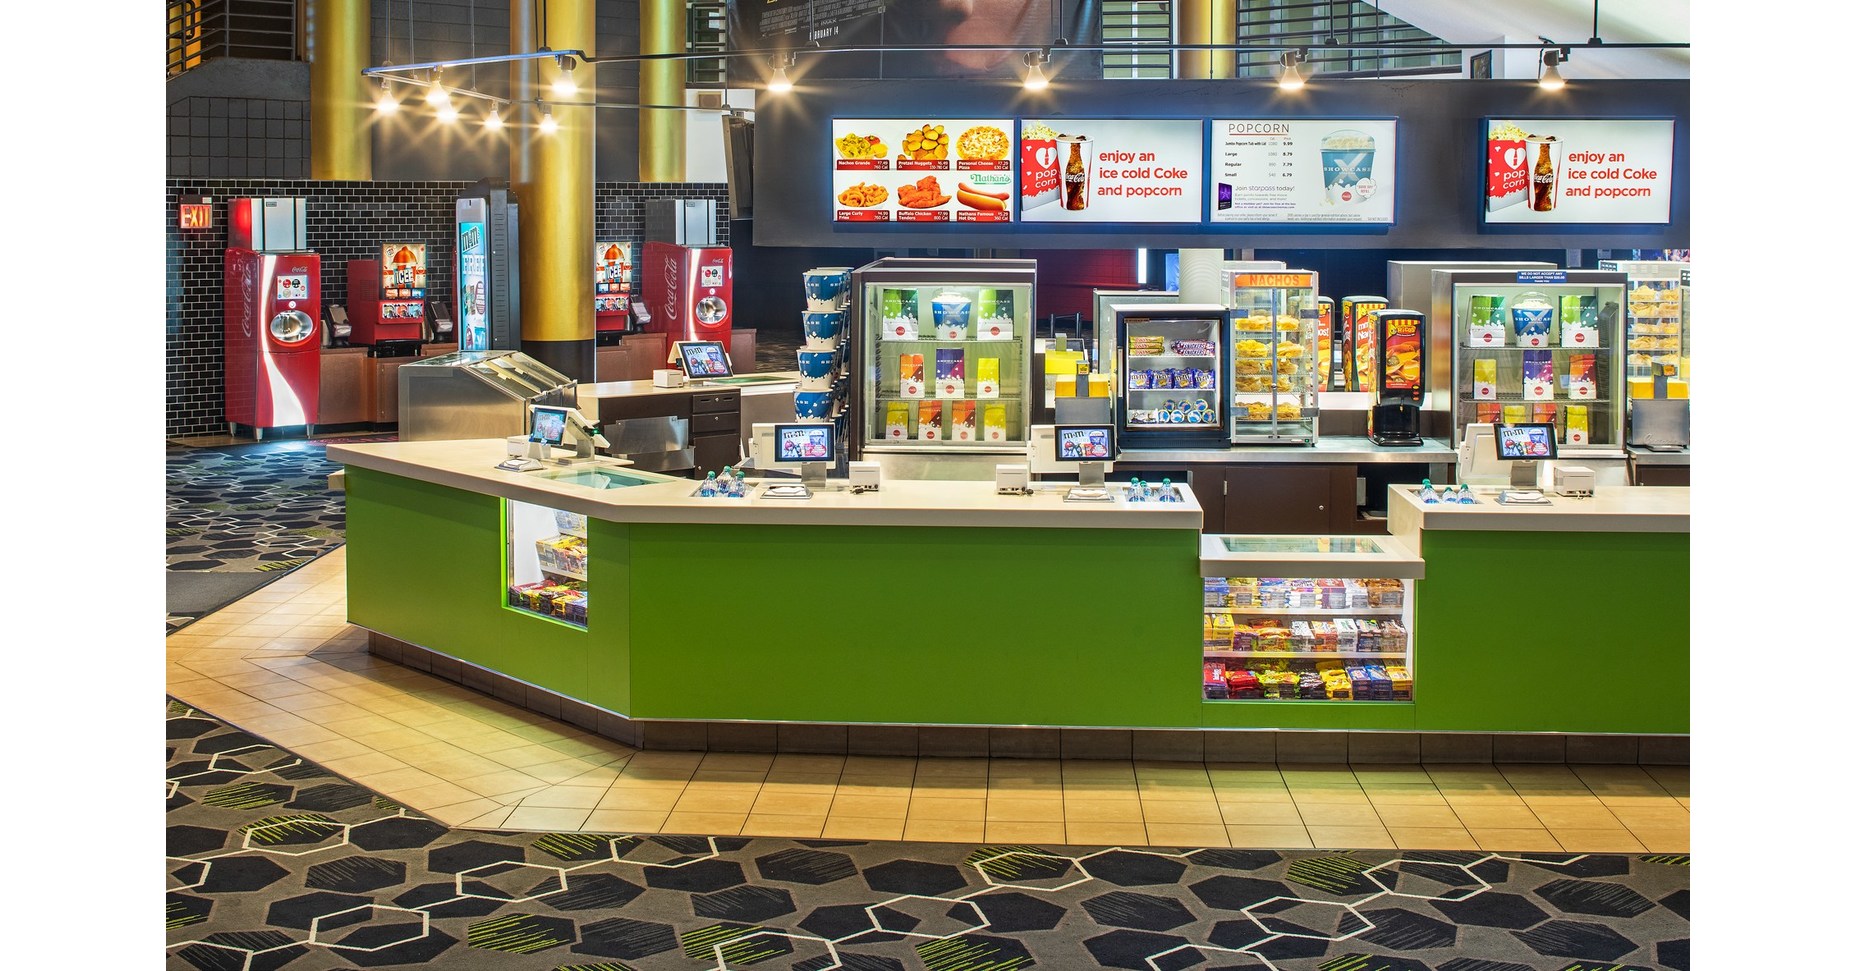 Showcase Cinemas Announces Reopening Of Concourse Plaza Multiplex